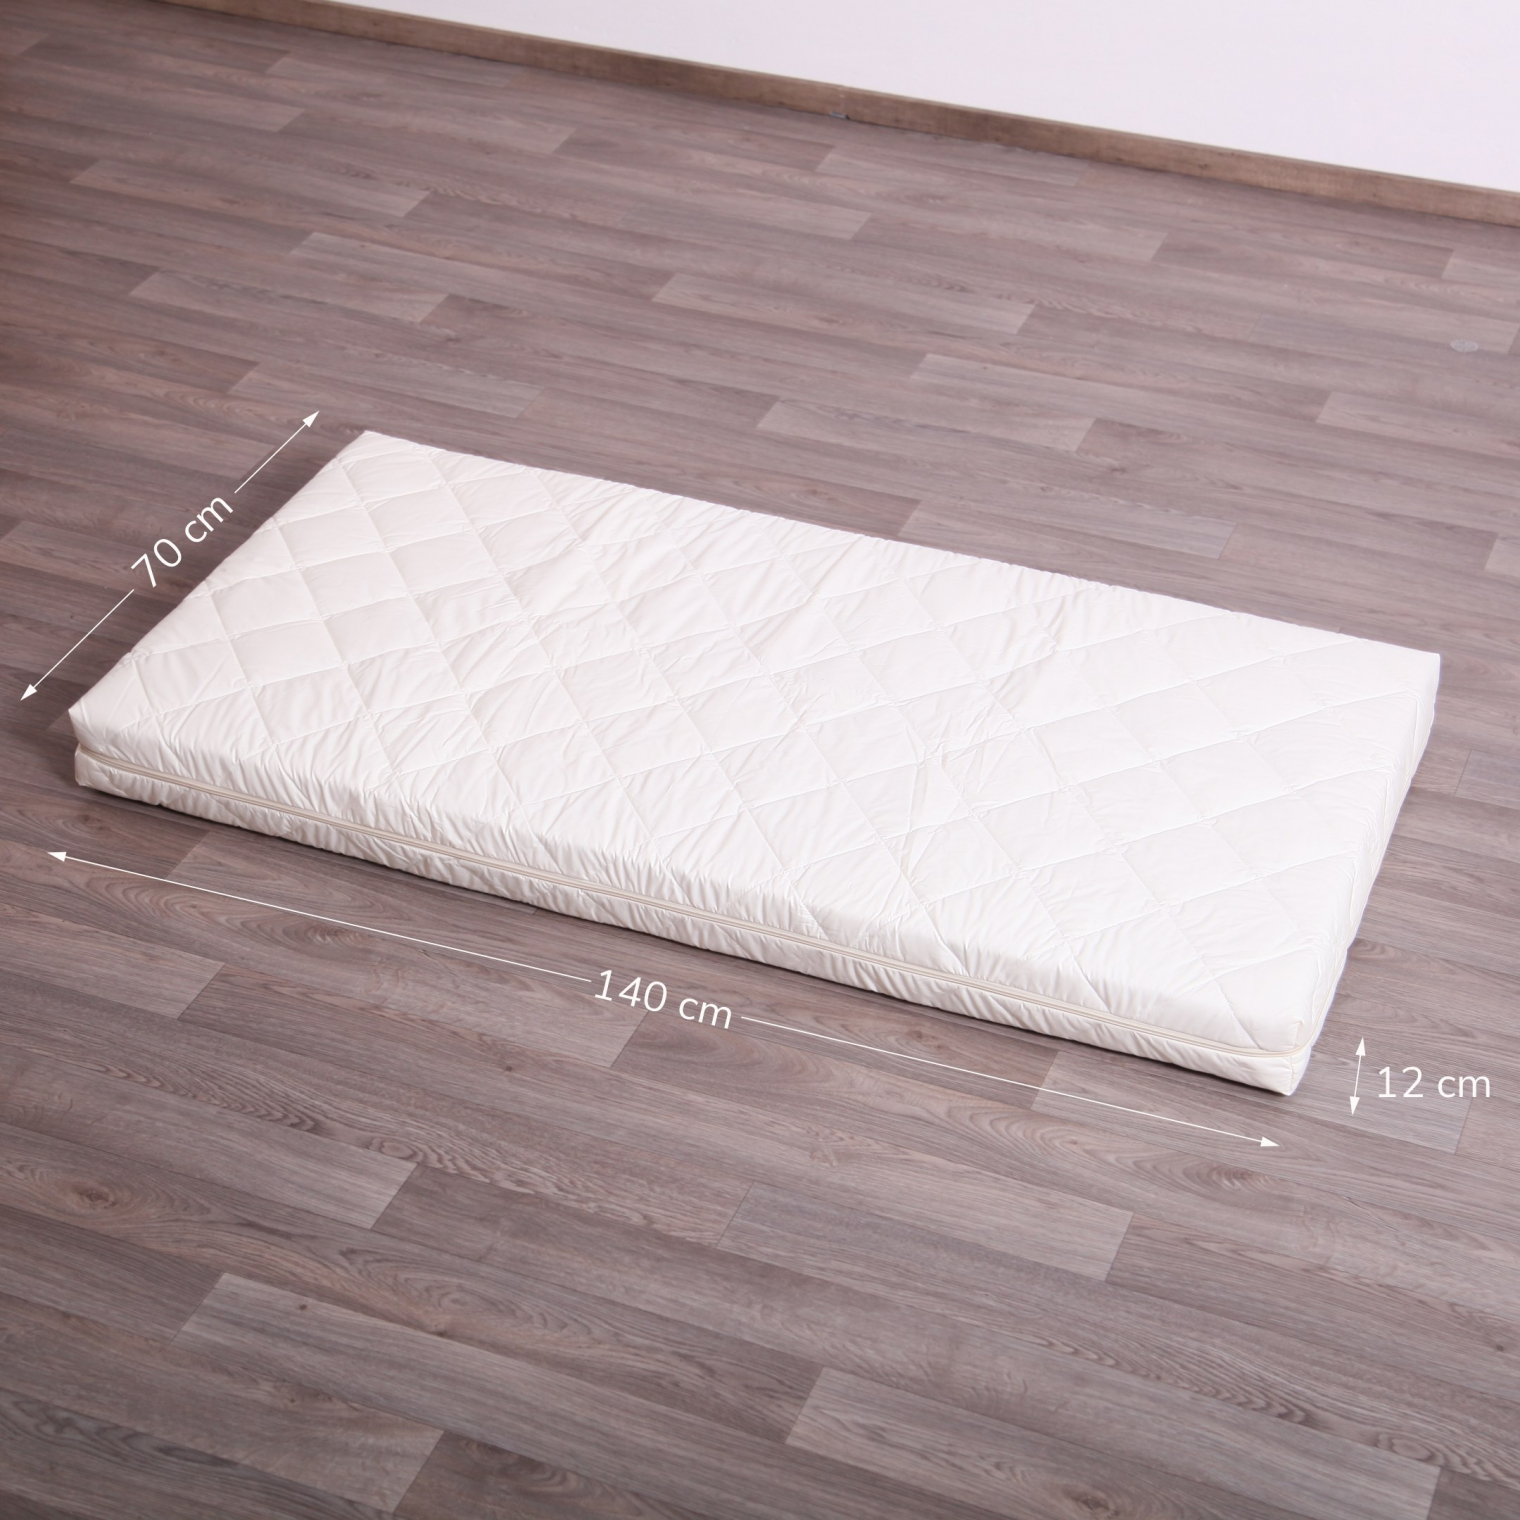 DELUXE BRUBI mattress